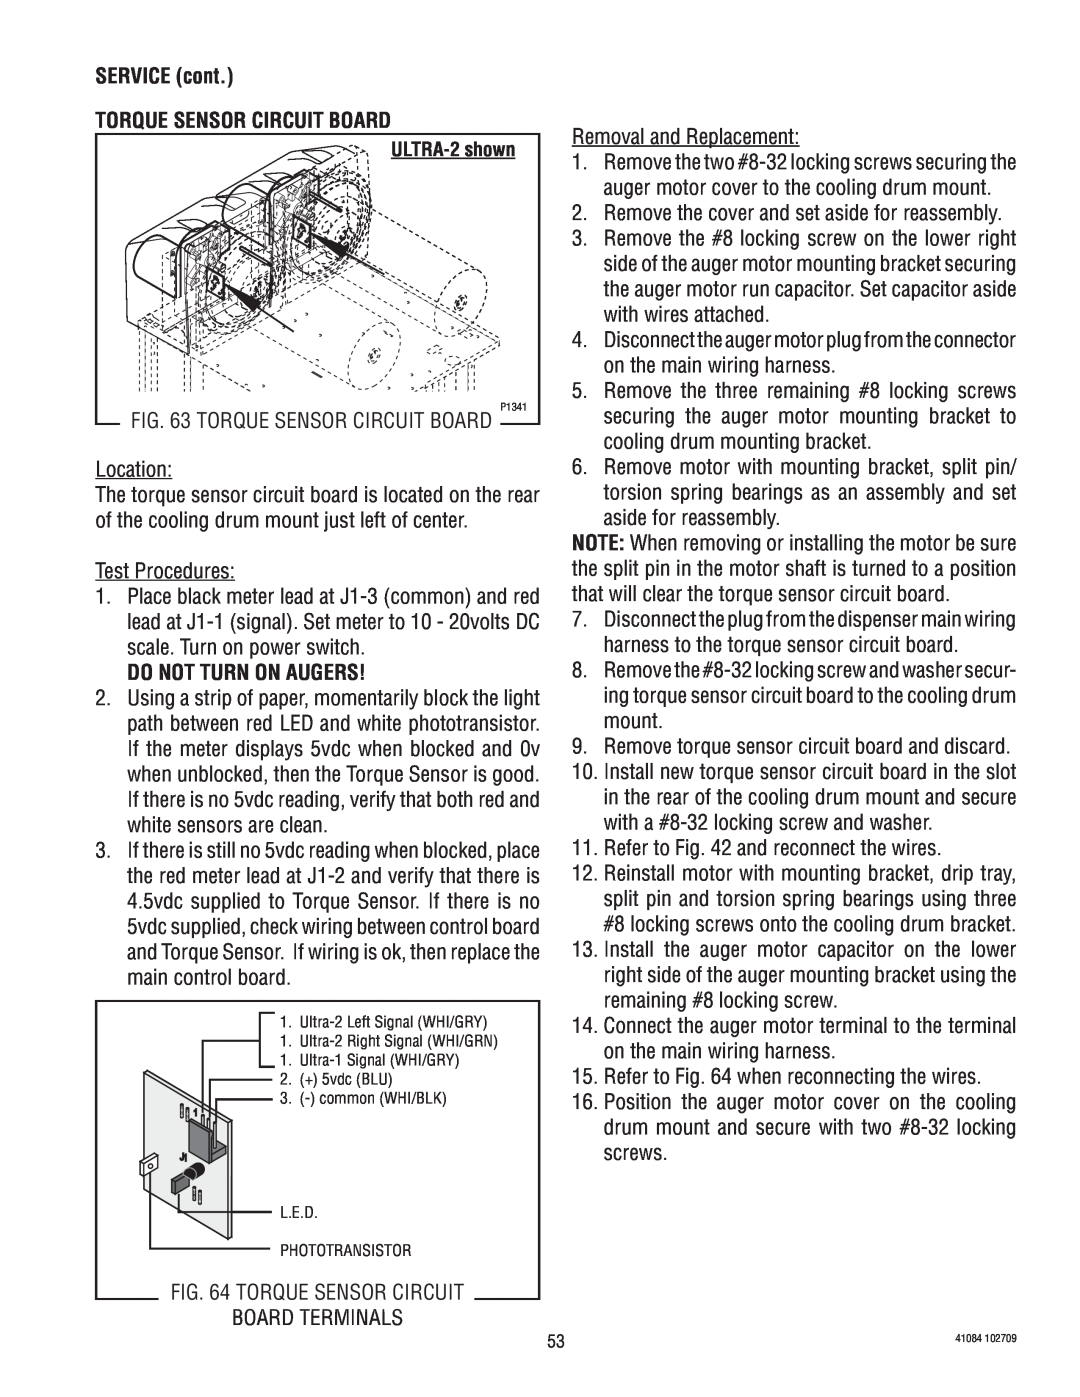 Bunn ULTRA-1 manual SERVICE cont TORQUE SENSOR CIRCUIT BOARD, Do Not Turn On Augers 